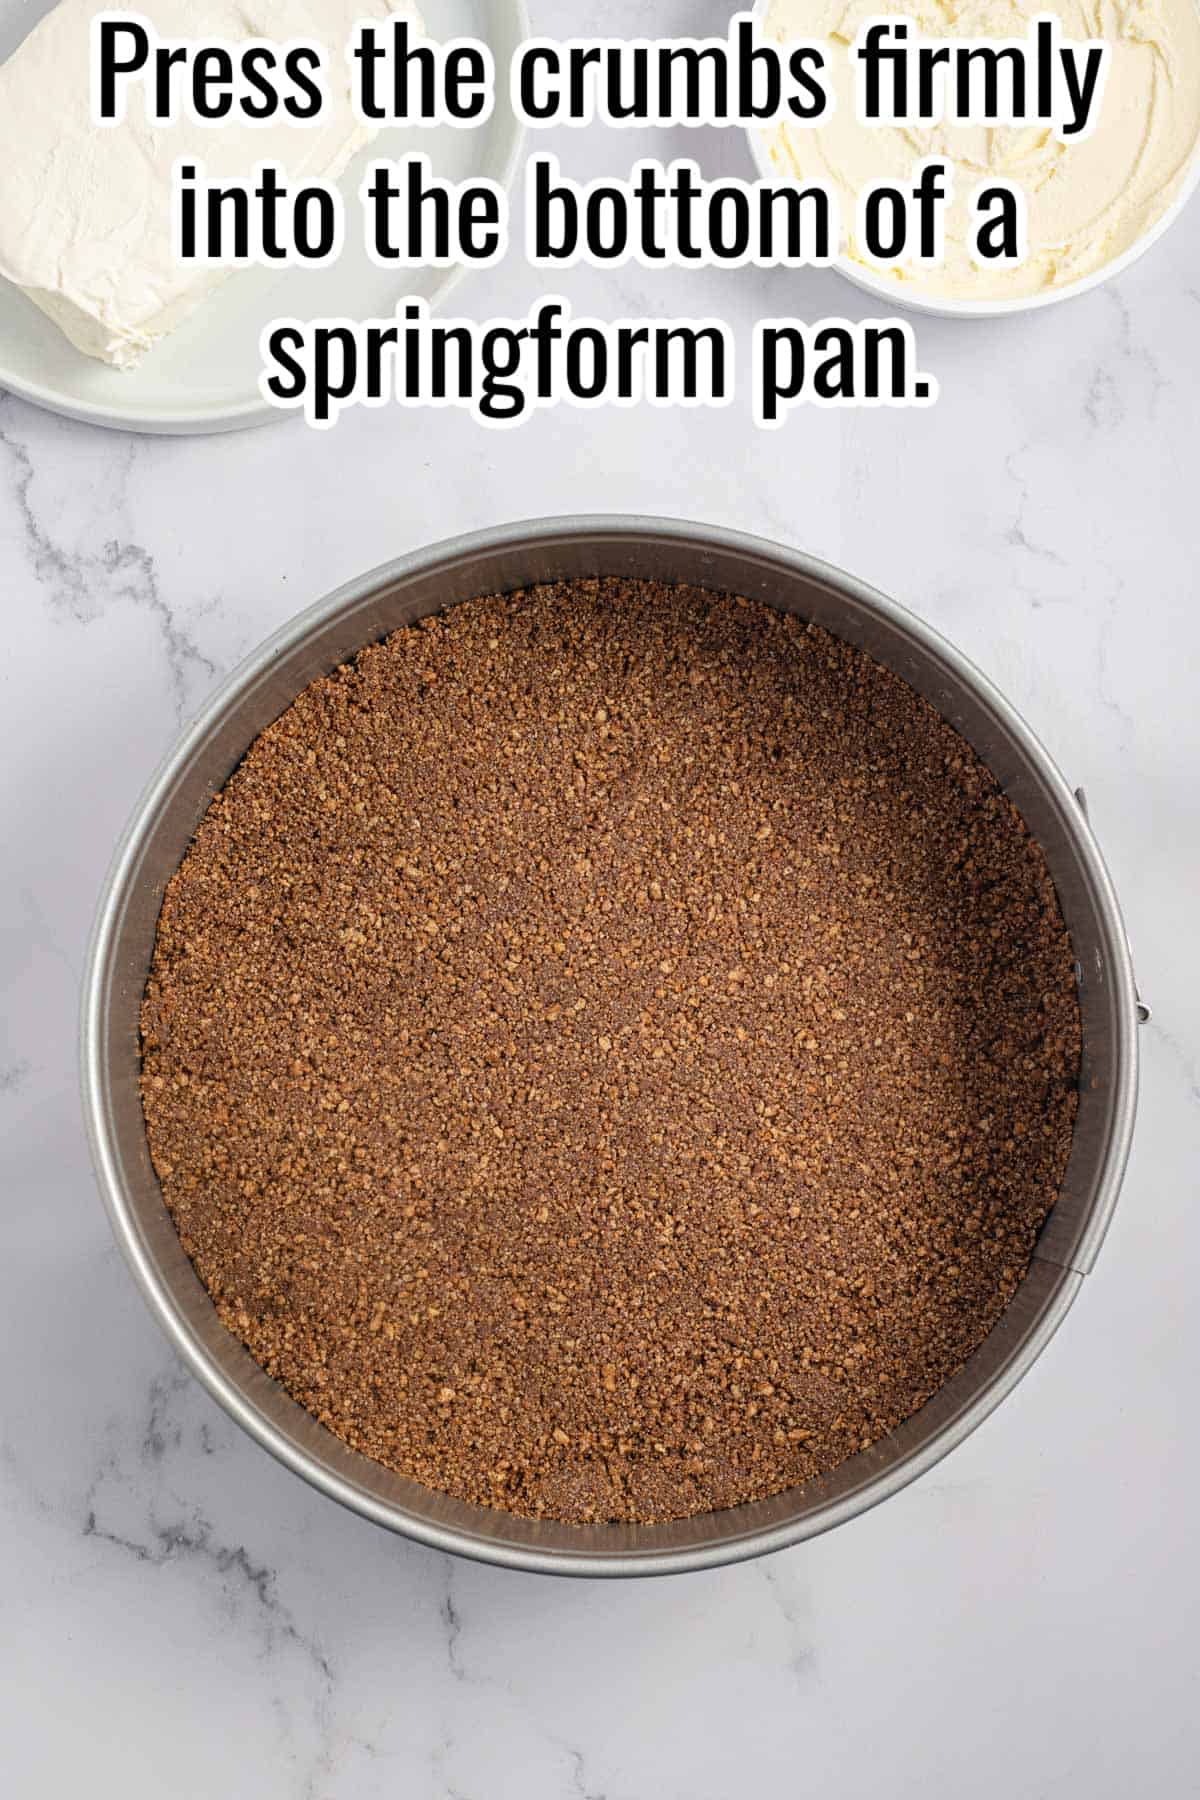 graham cracker crust pressed into a springform pan.